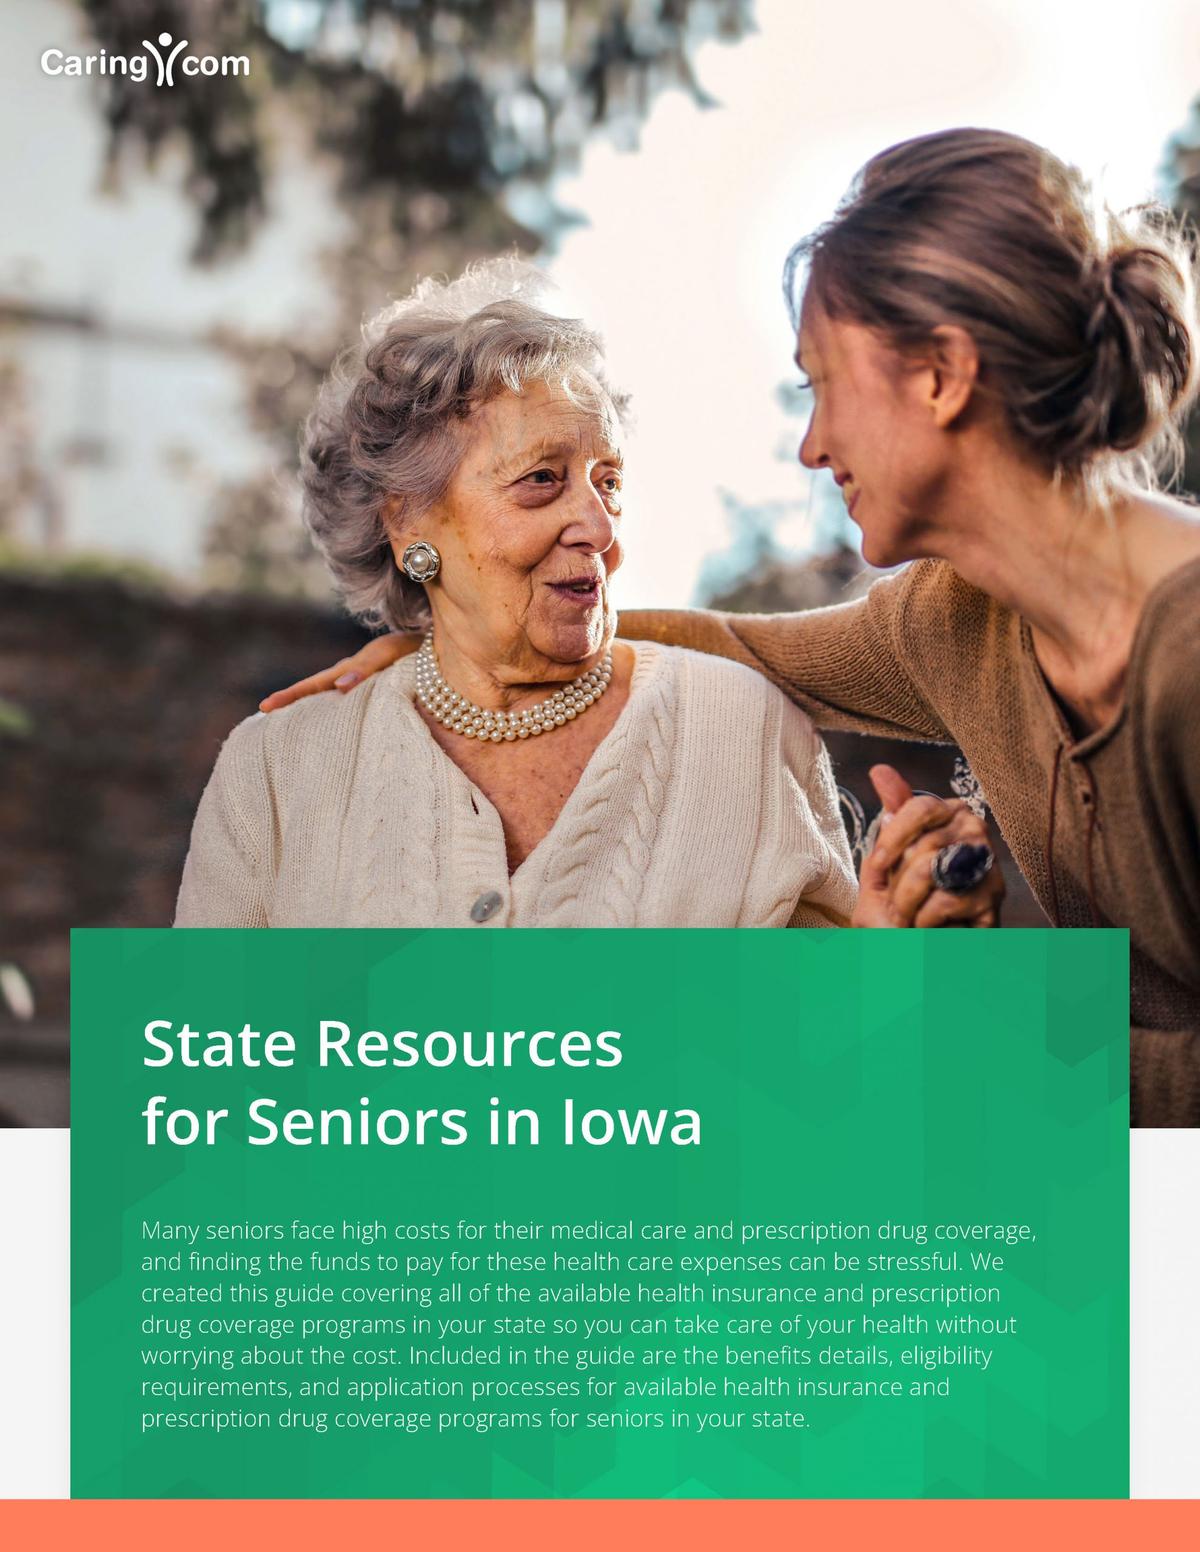 GovFinancial Assistance for Prescriptions in Iowa